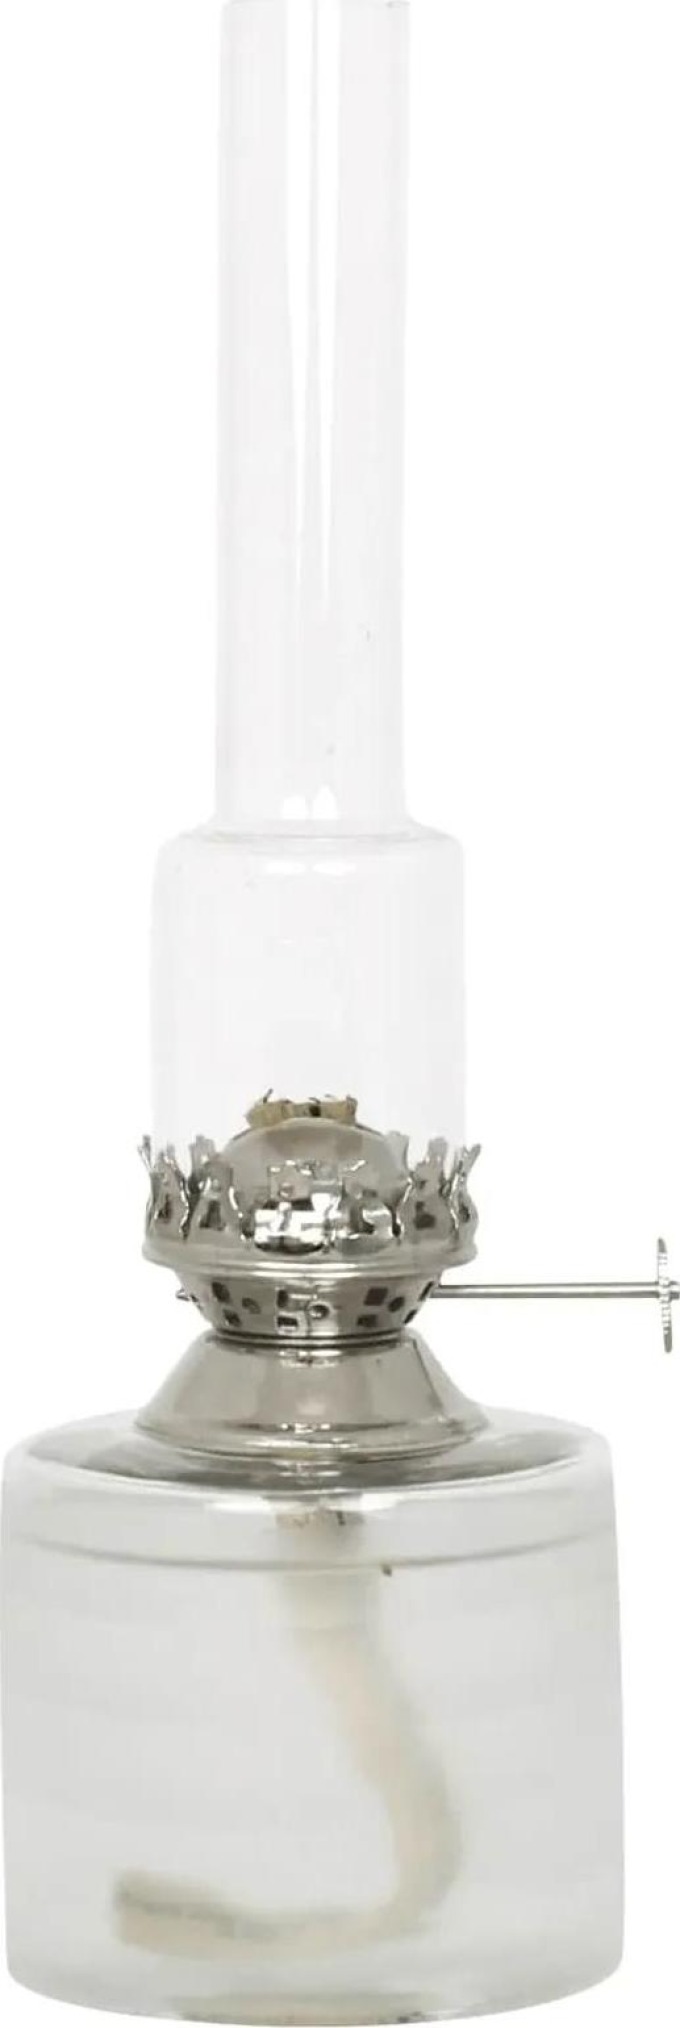 Strömshaga Skleněná petrolejová lampa Straight Frost Small Nickel, čirá barva, sklo